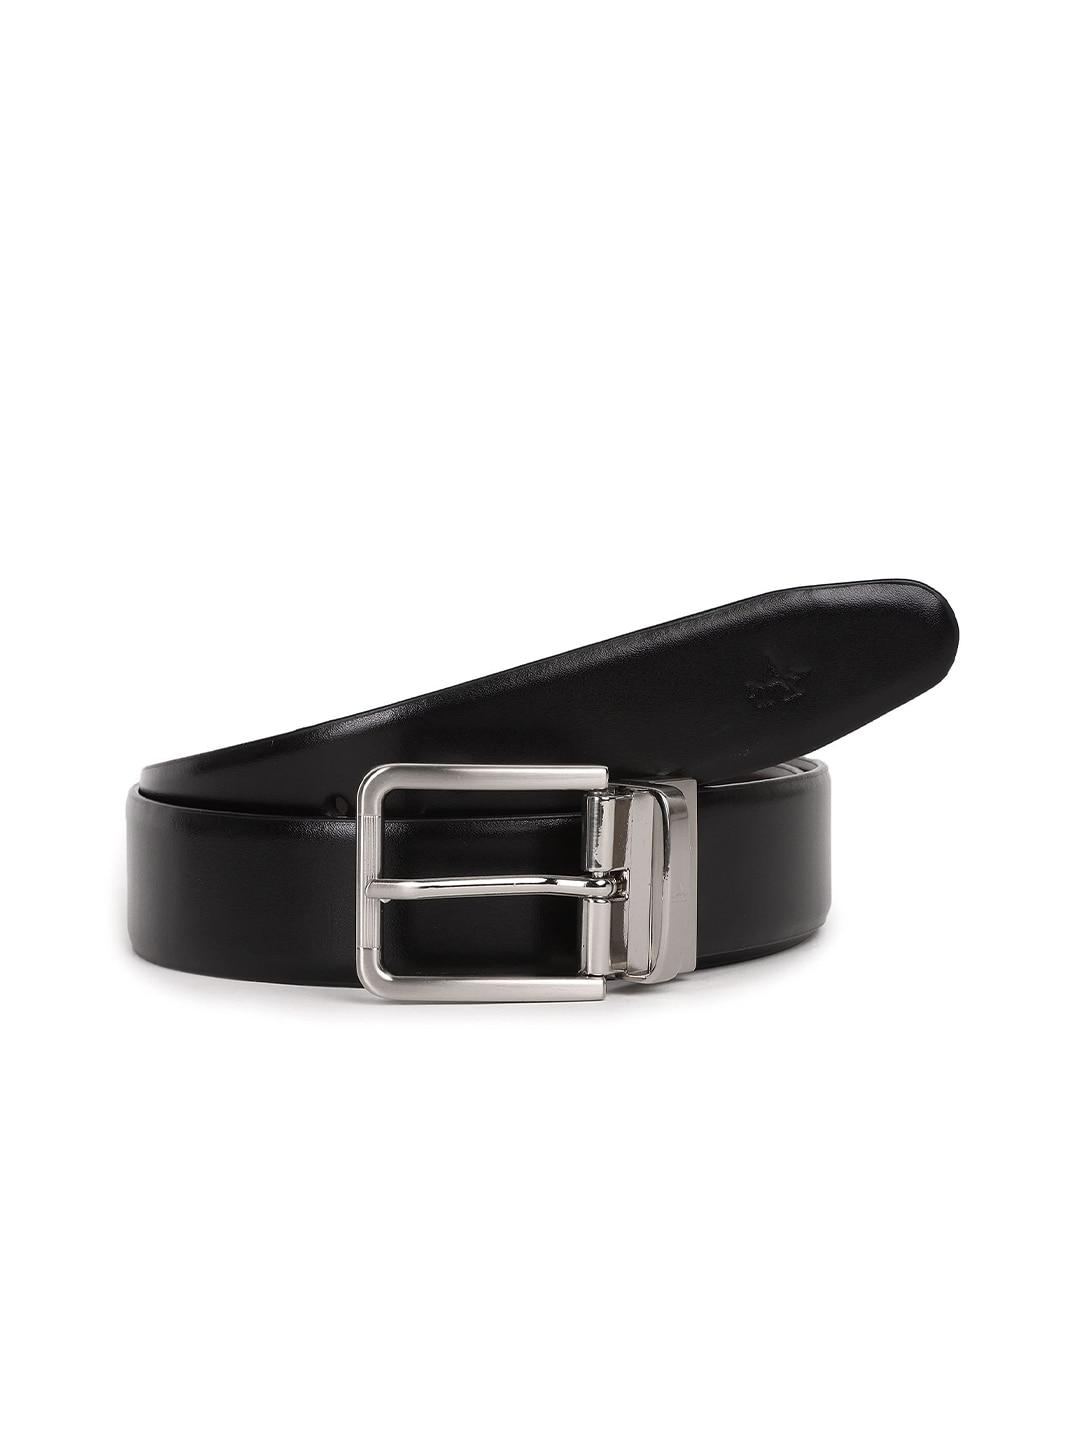 Arrow Men Leather Reversible Formal Belt